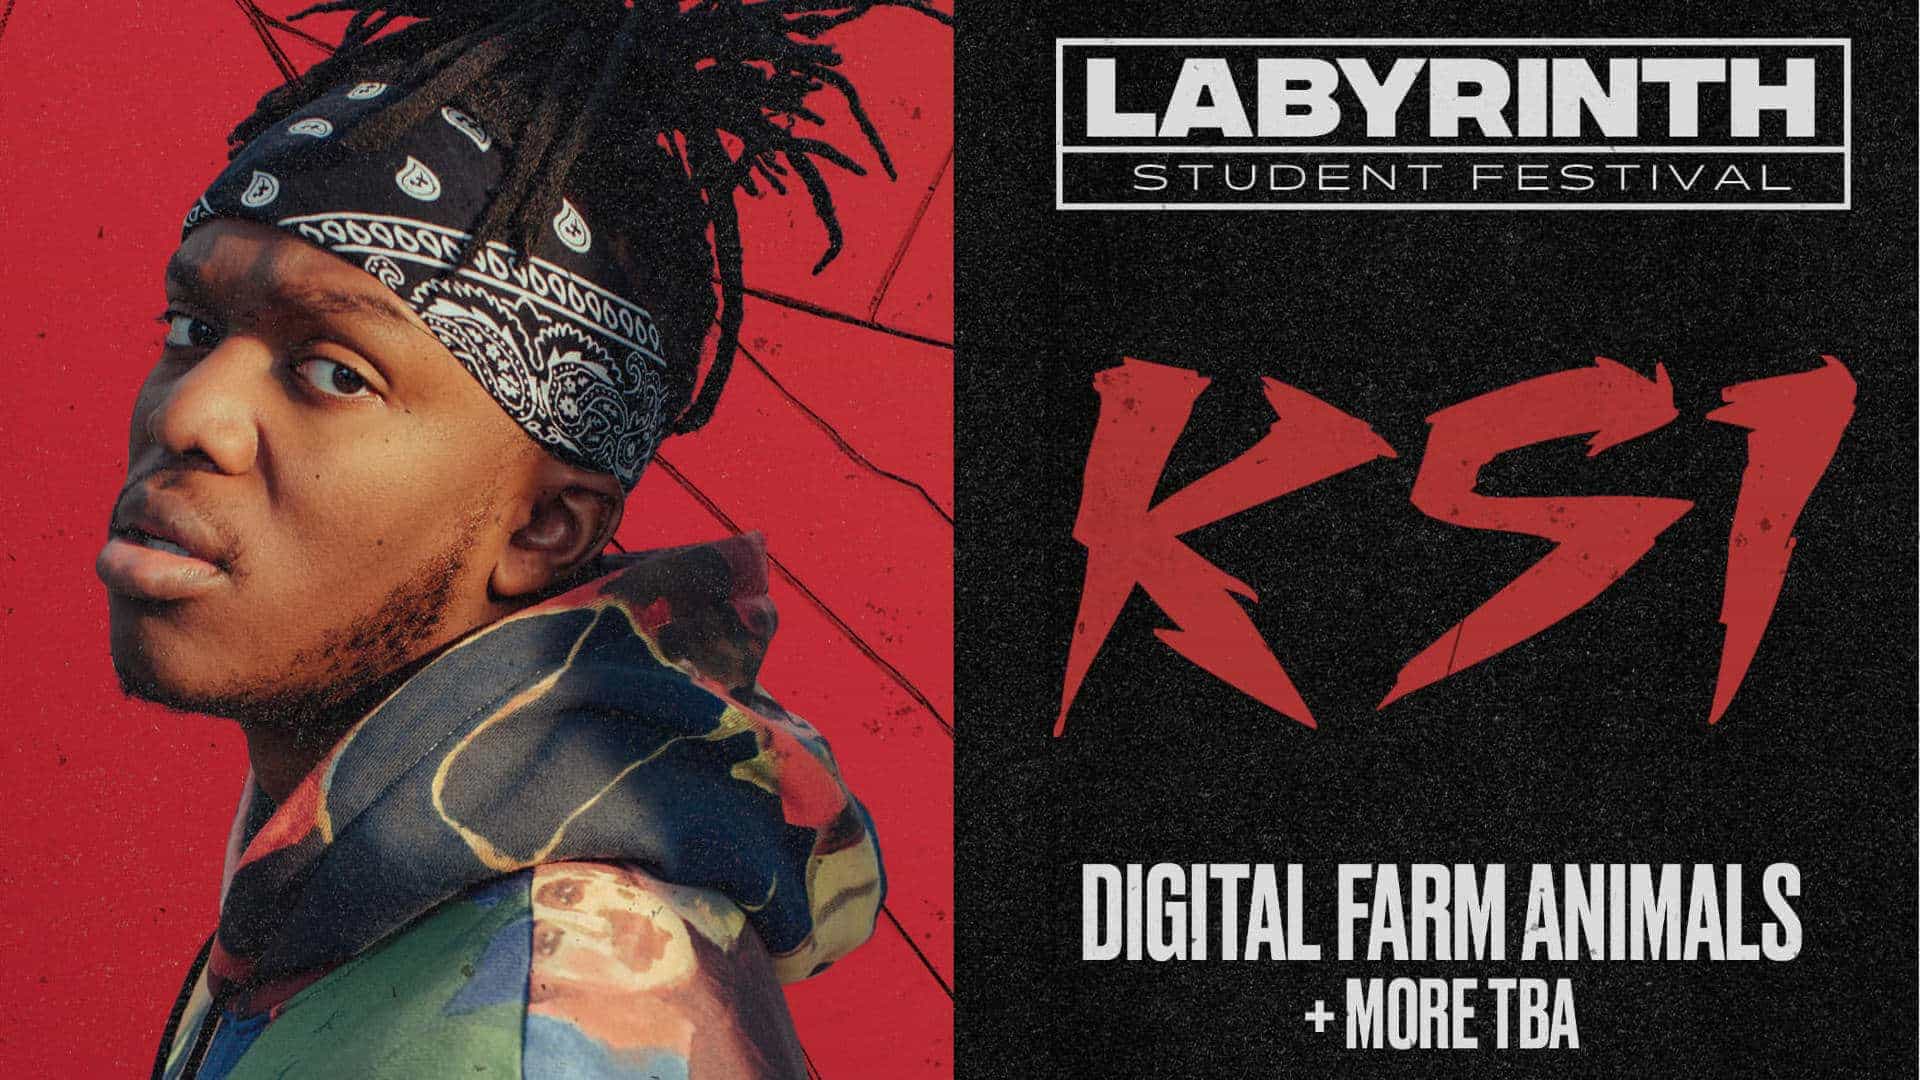 Labyrinth Festival - KSI + Digital Farm Animals